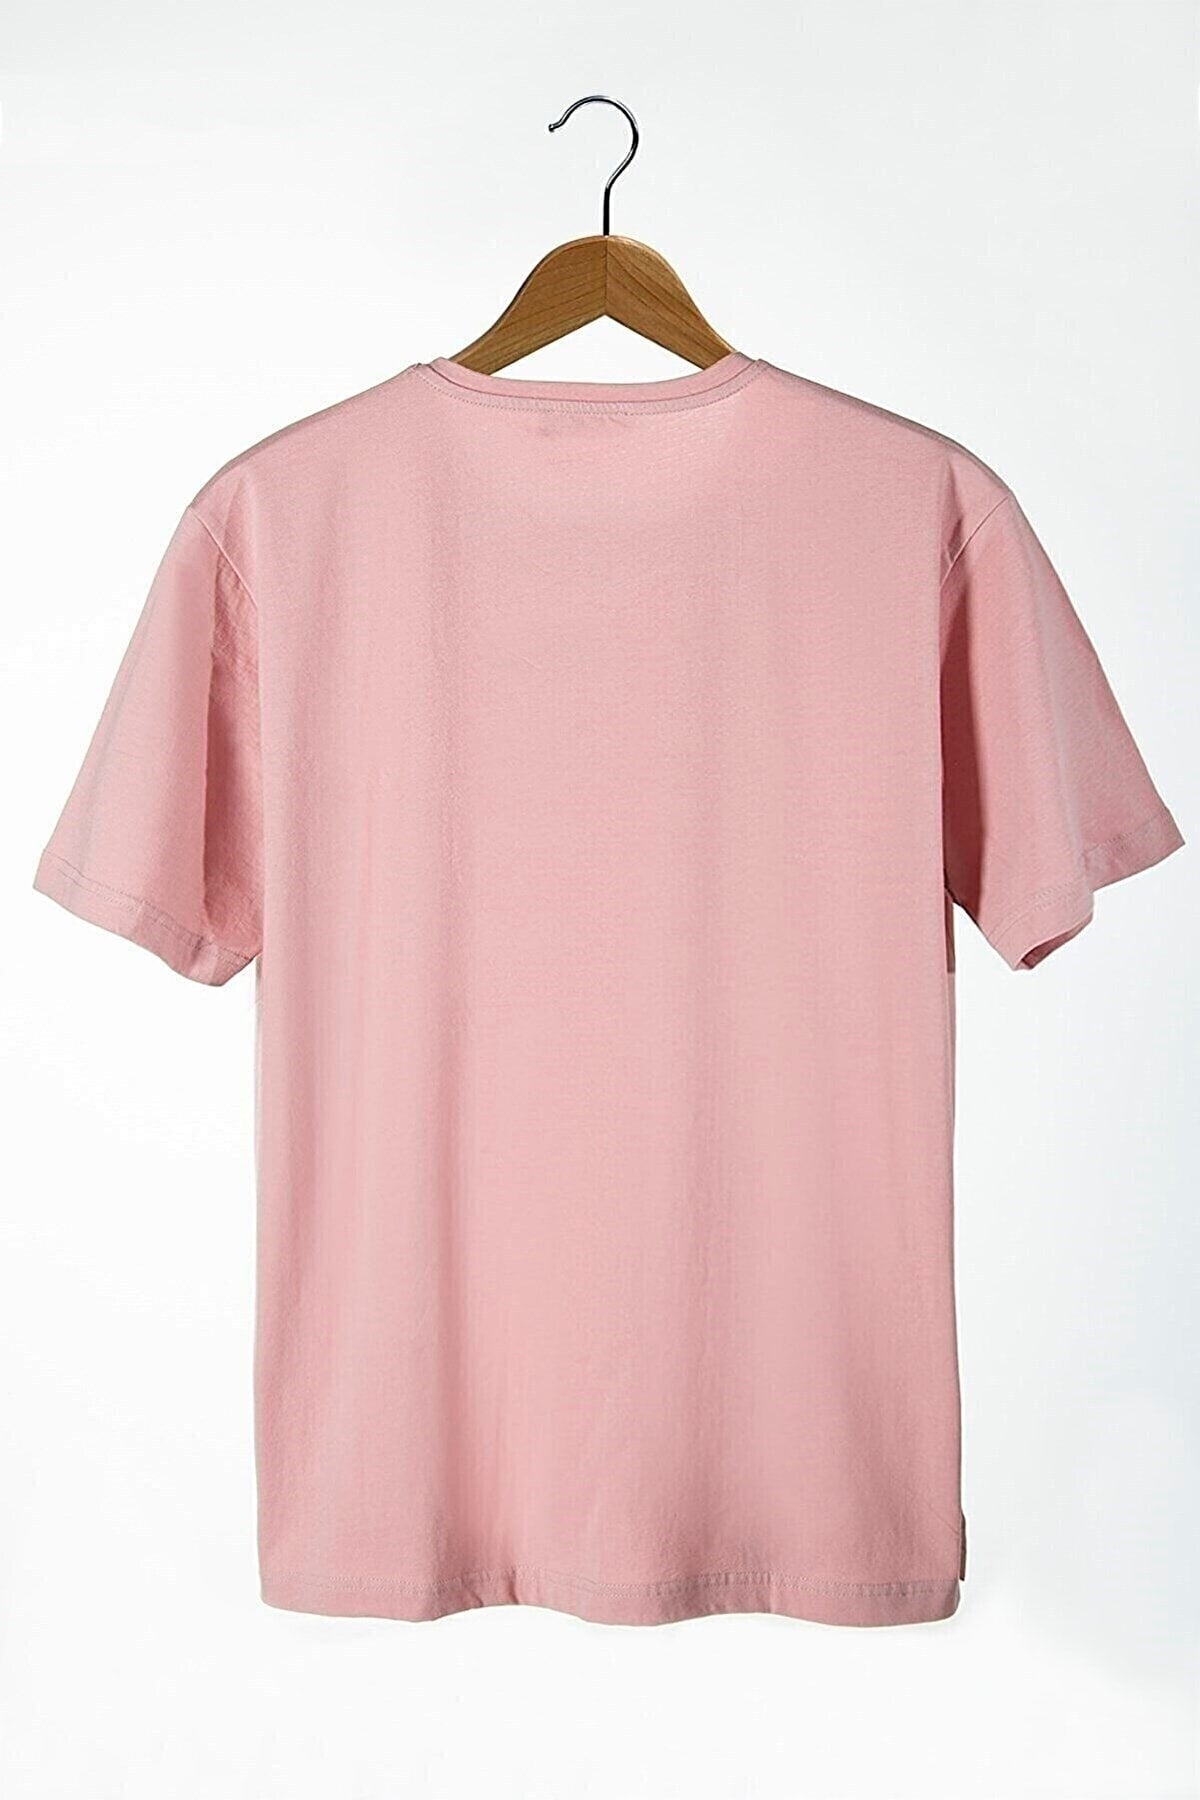 Men's Pink Panda Printed Crew Neck Oversize Fit Basic Cotton T-shirt